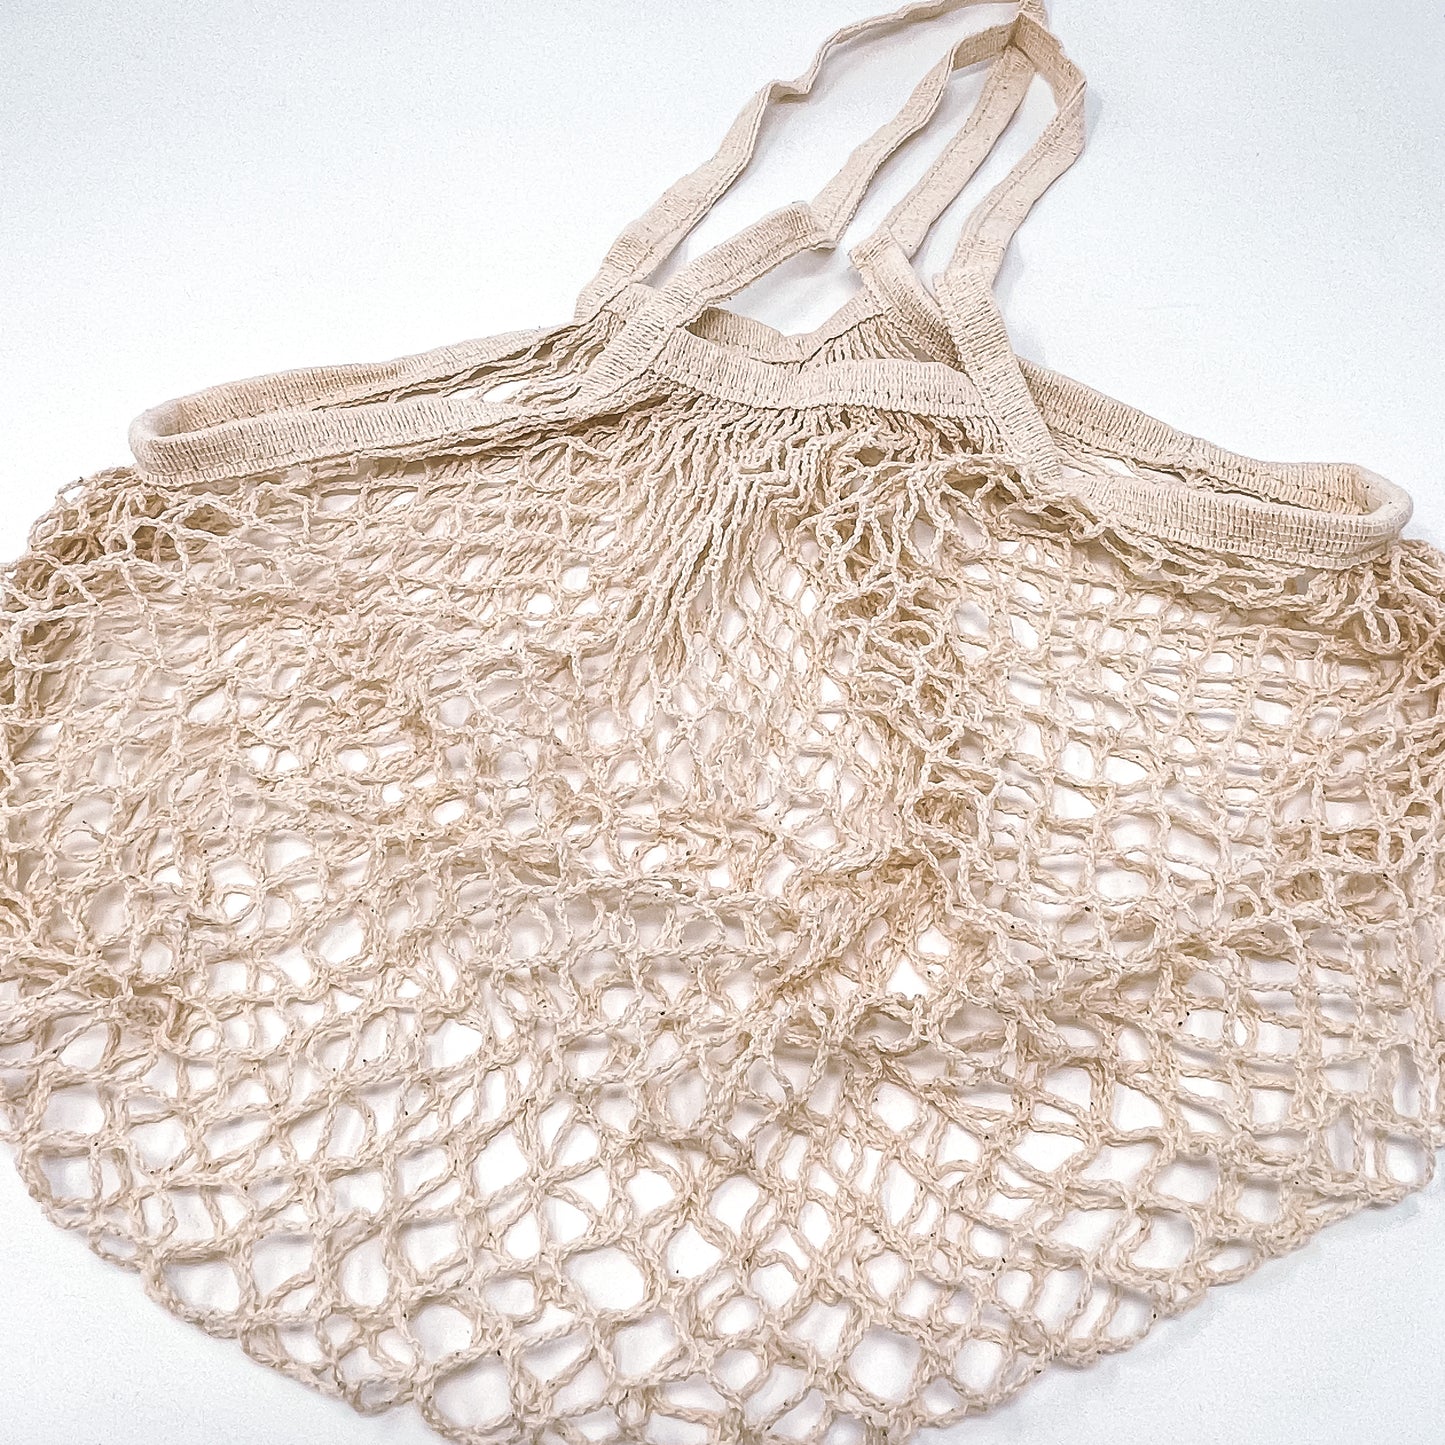 Net String Shopping Tote Bag